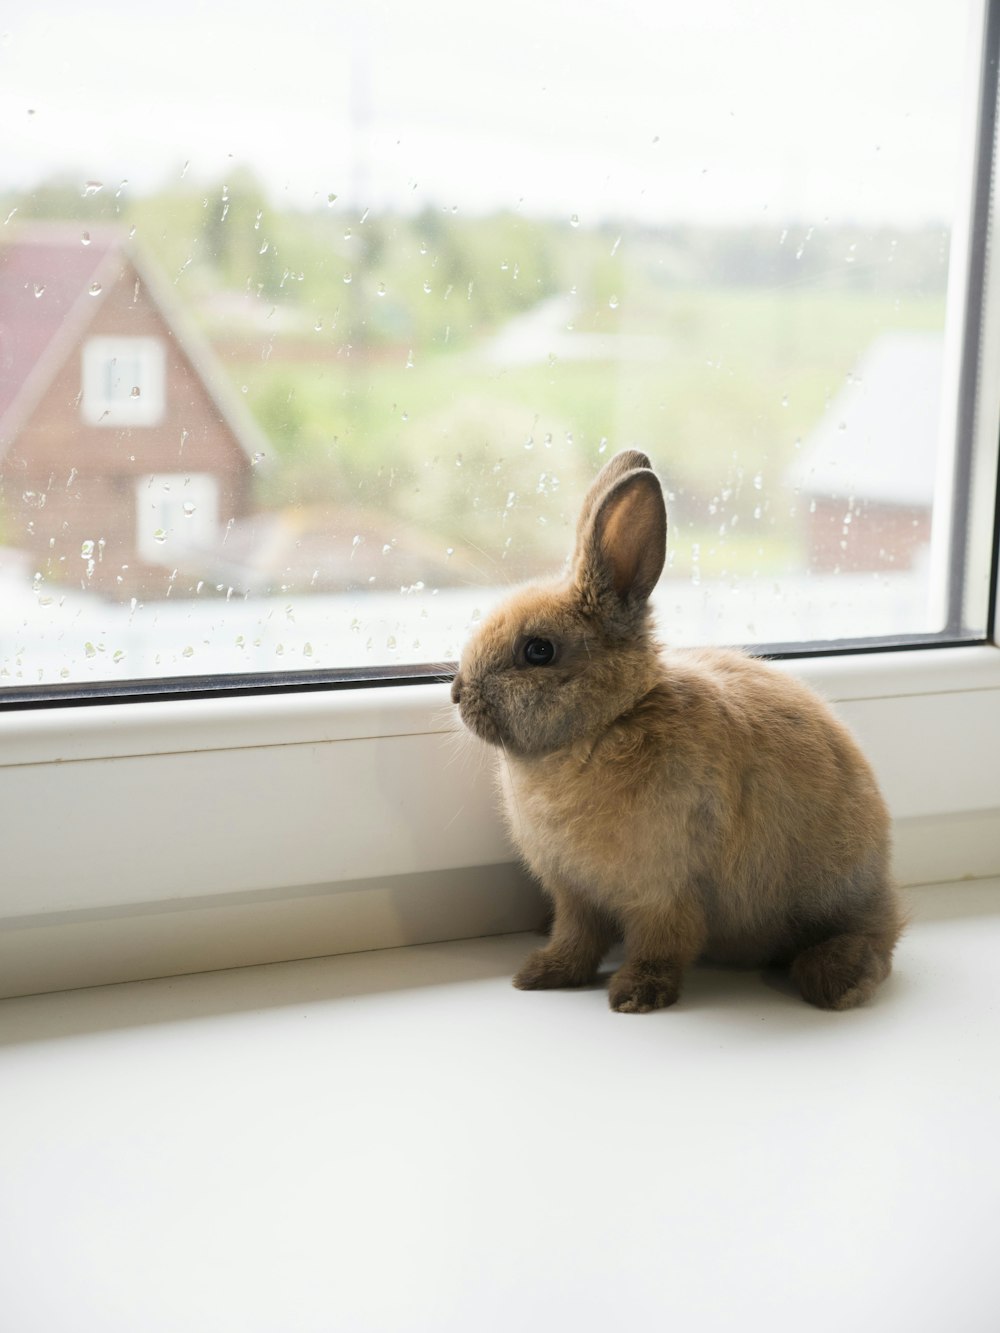 a small rabbit sitting on a window sill